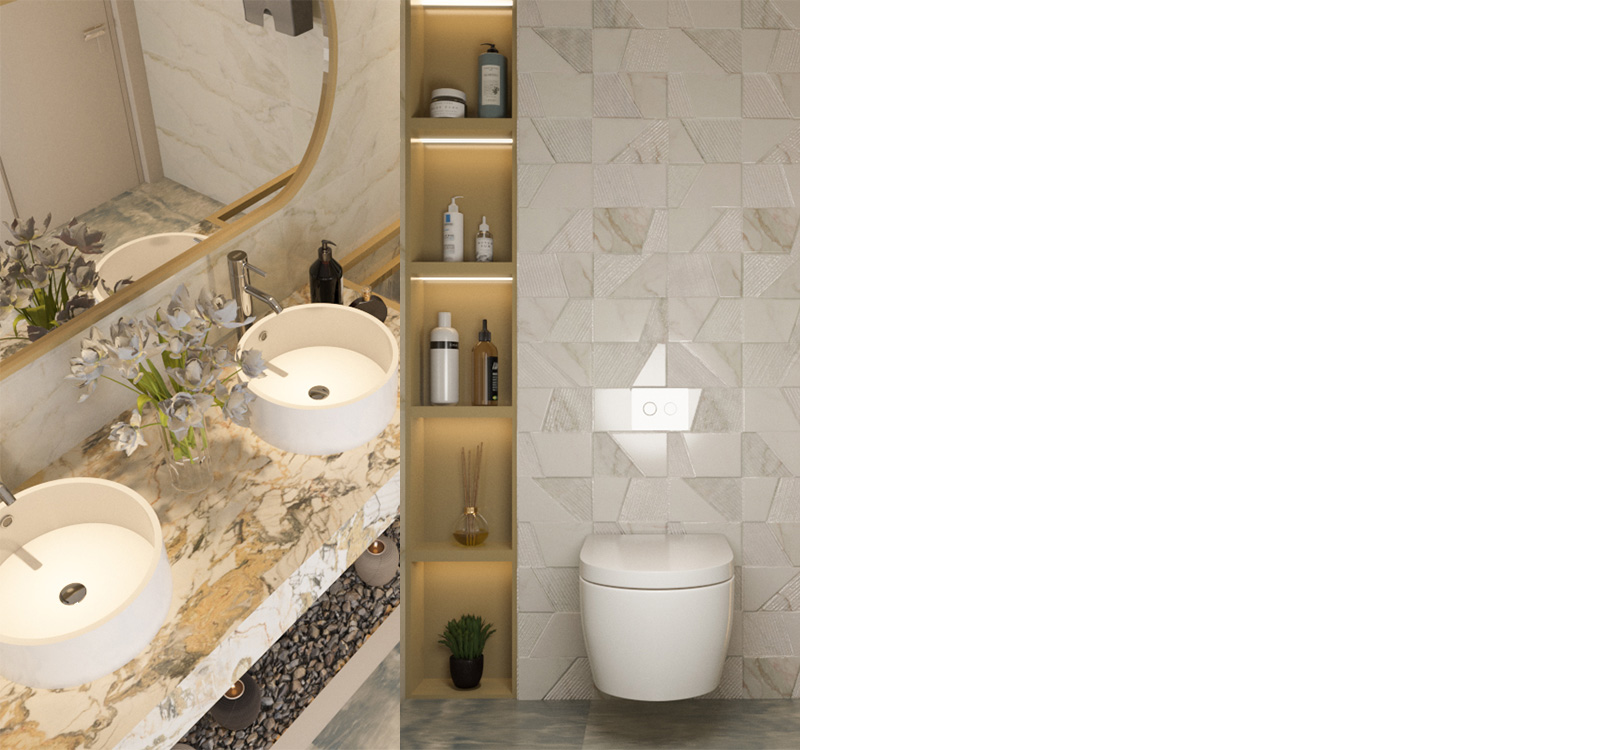 Nazo building materials, recognized brand in ceramic tiles industry